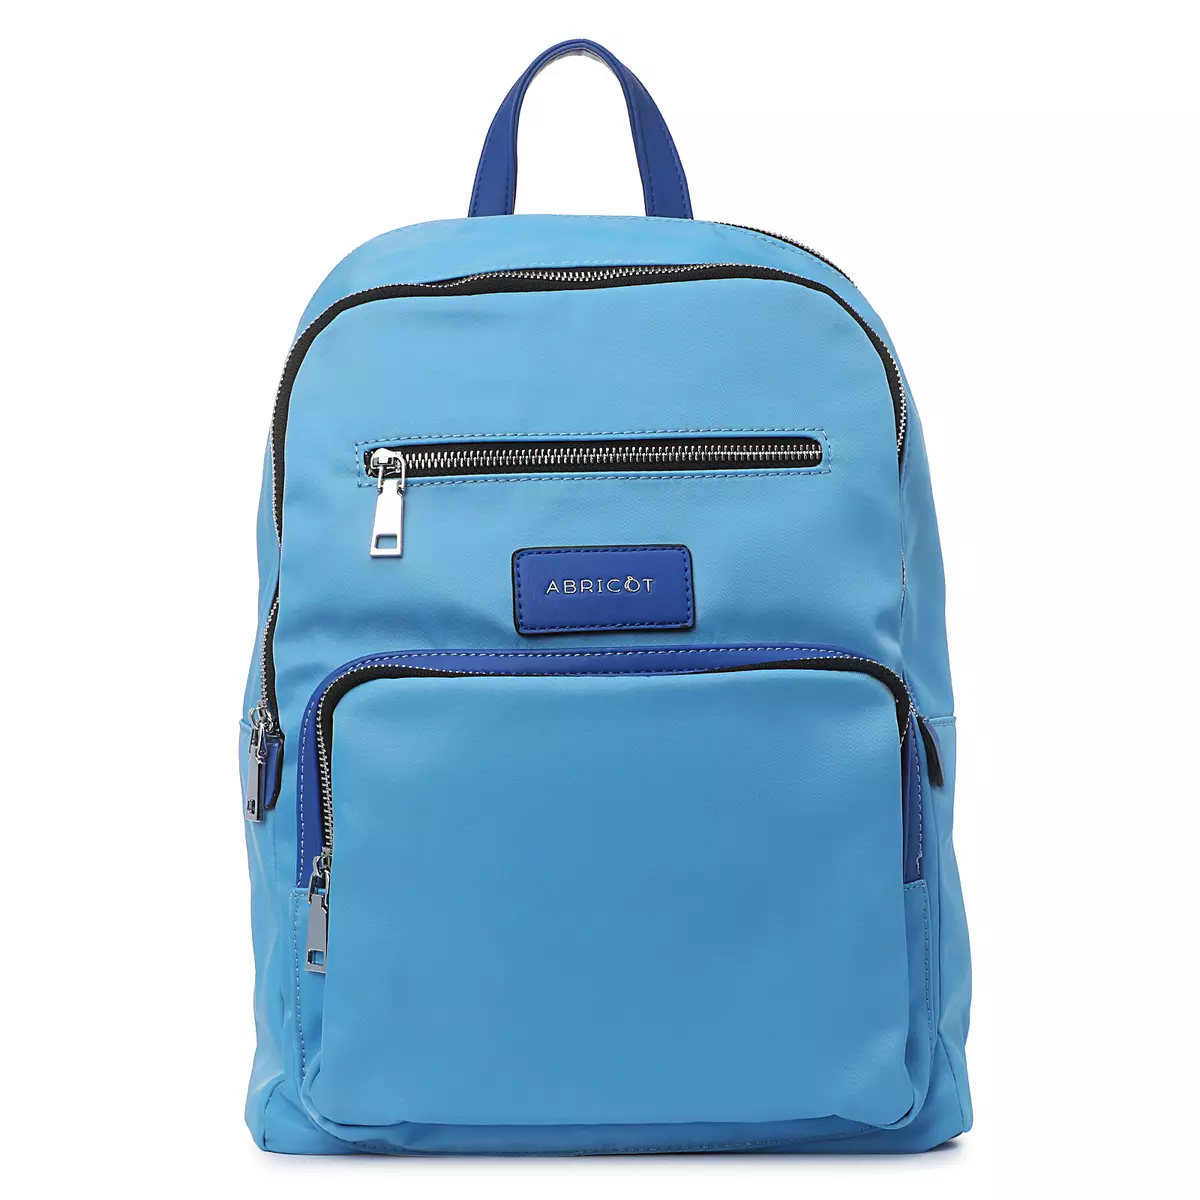 Backpacks Abricot: Μπλε, μαύρο, πράσινο, πράσινο και ροζ, καφέ και άλλα μοντέλα 15451_16